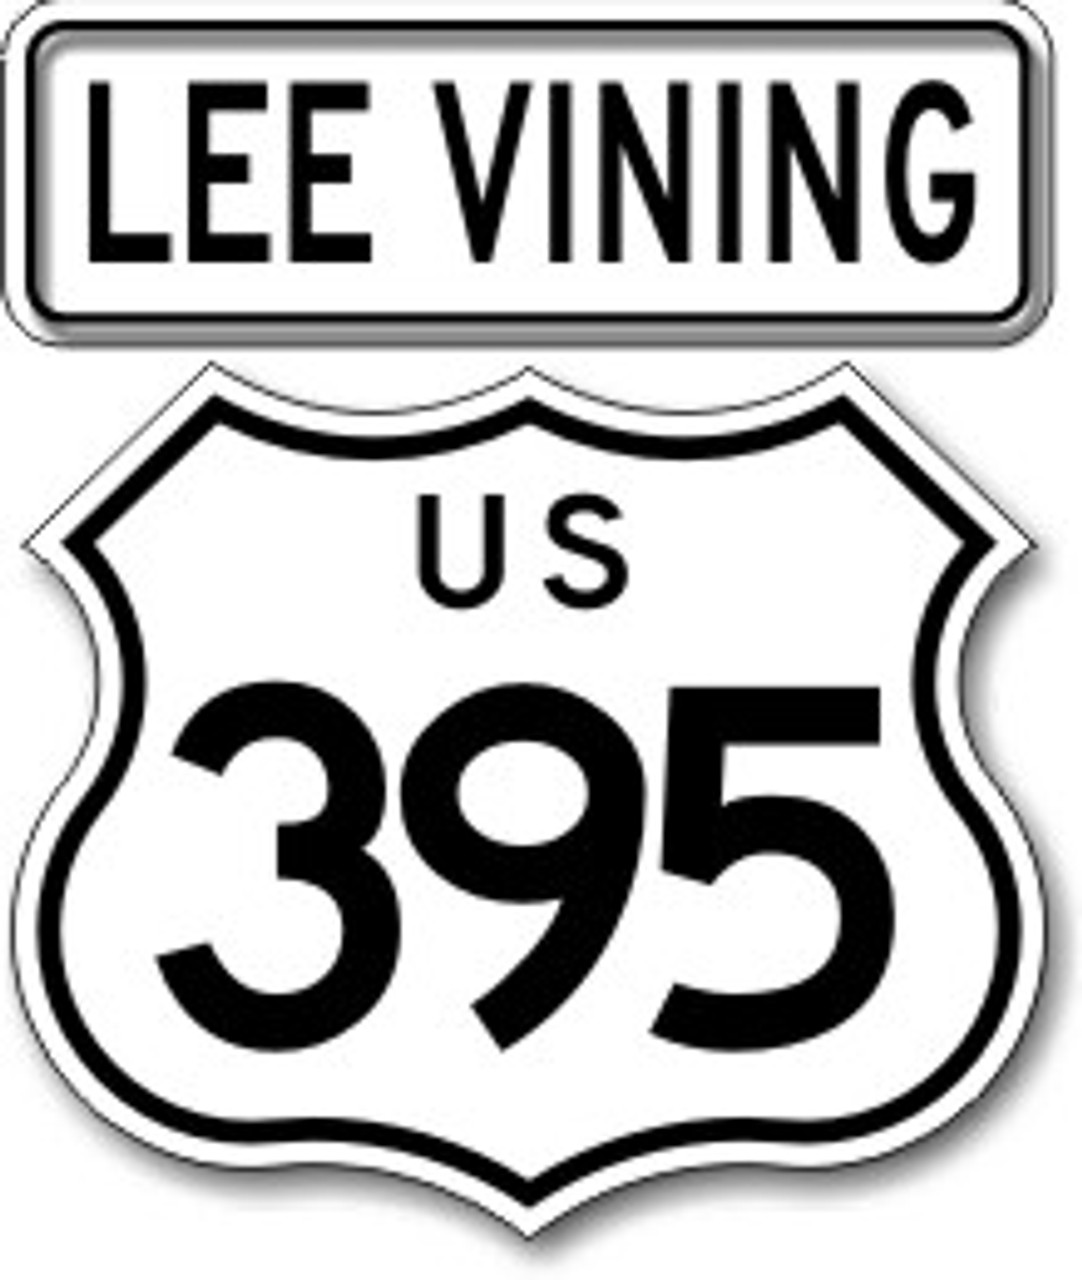 Route 395 Lee Vining 2-piece Sticker - 395 Store